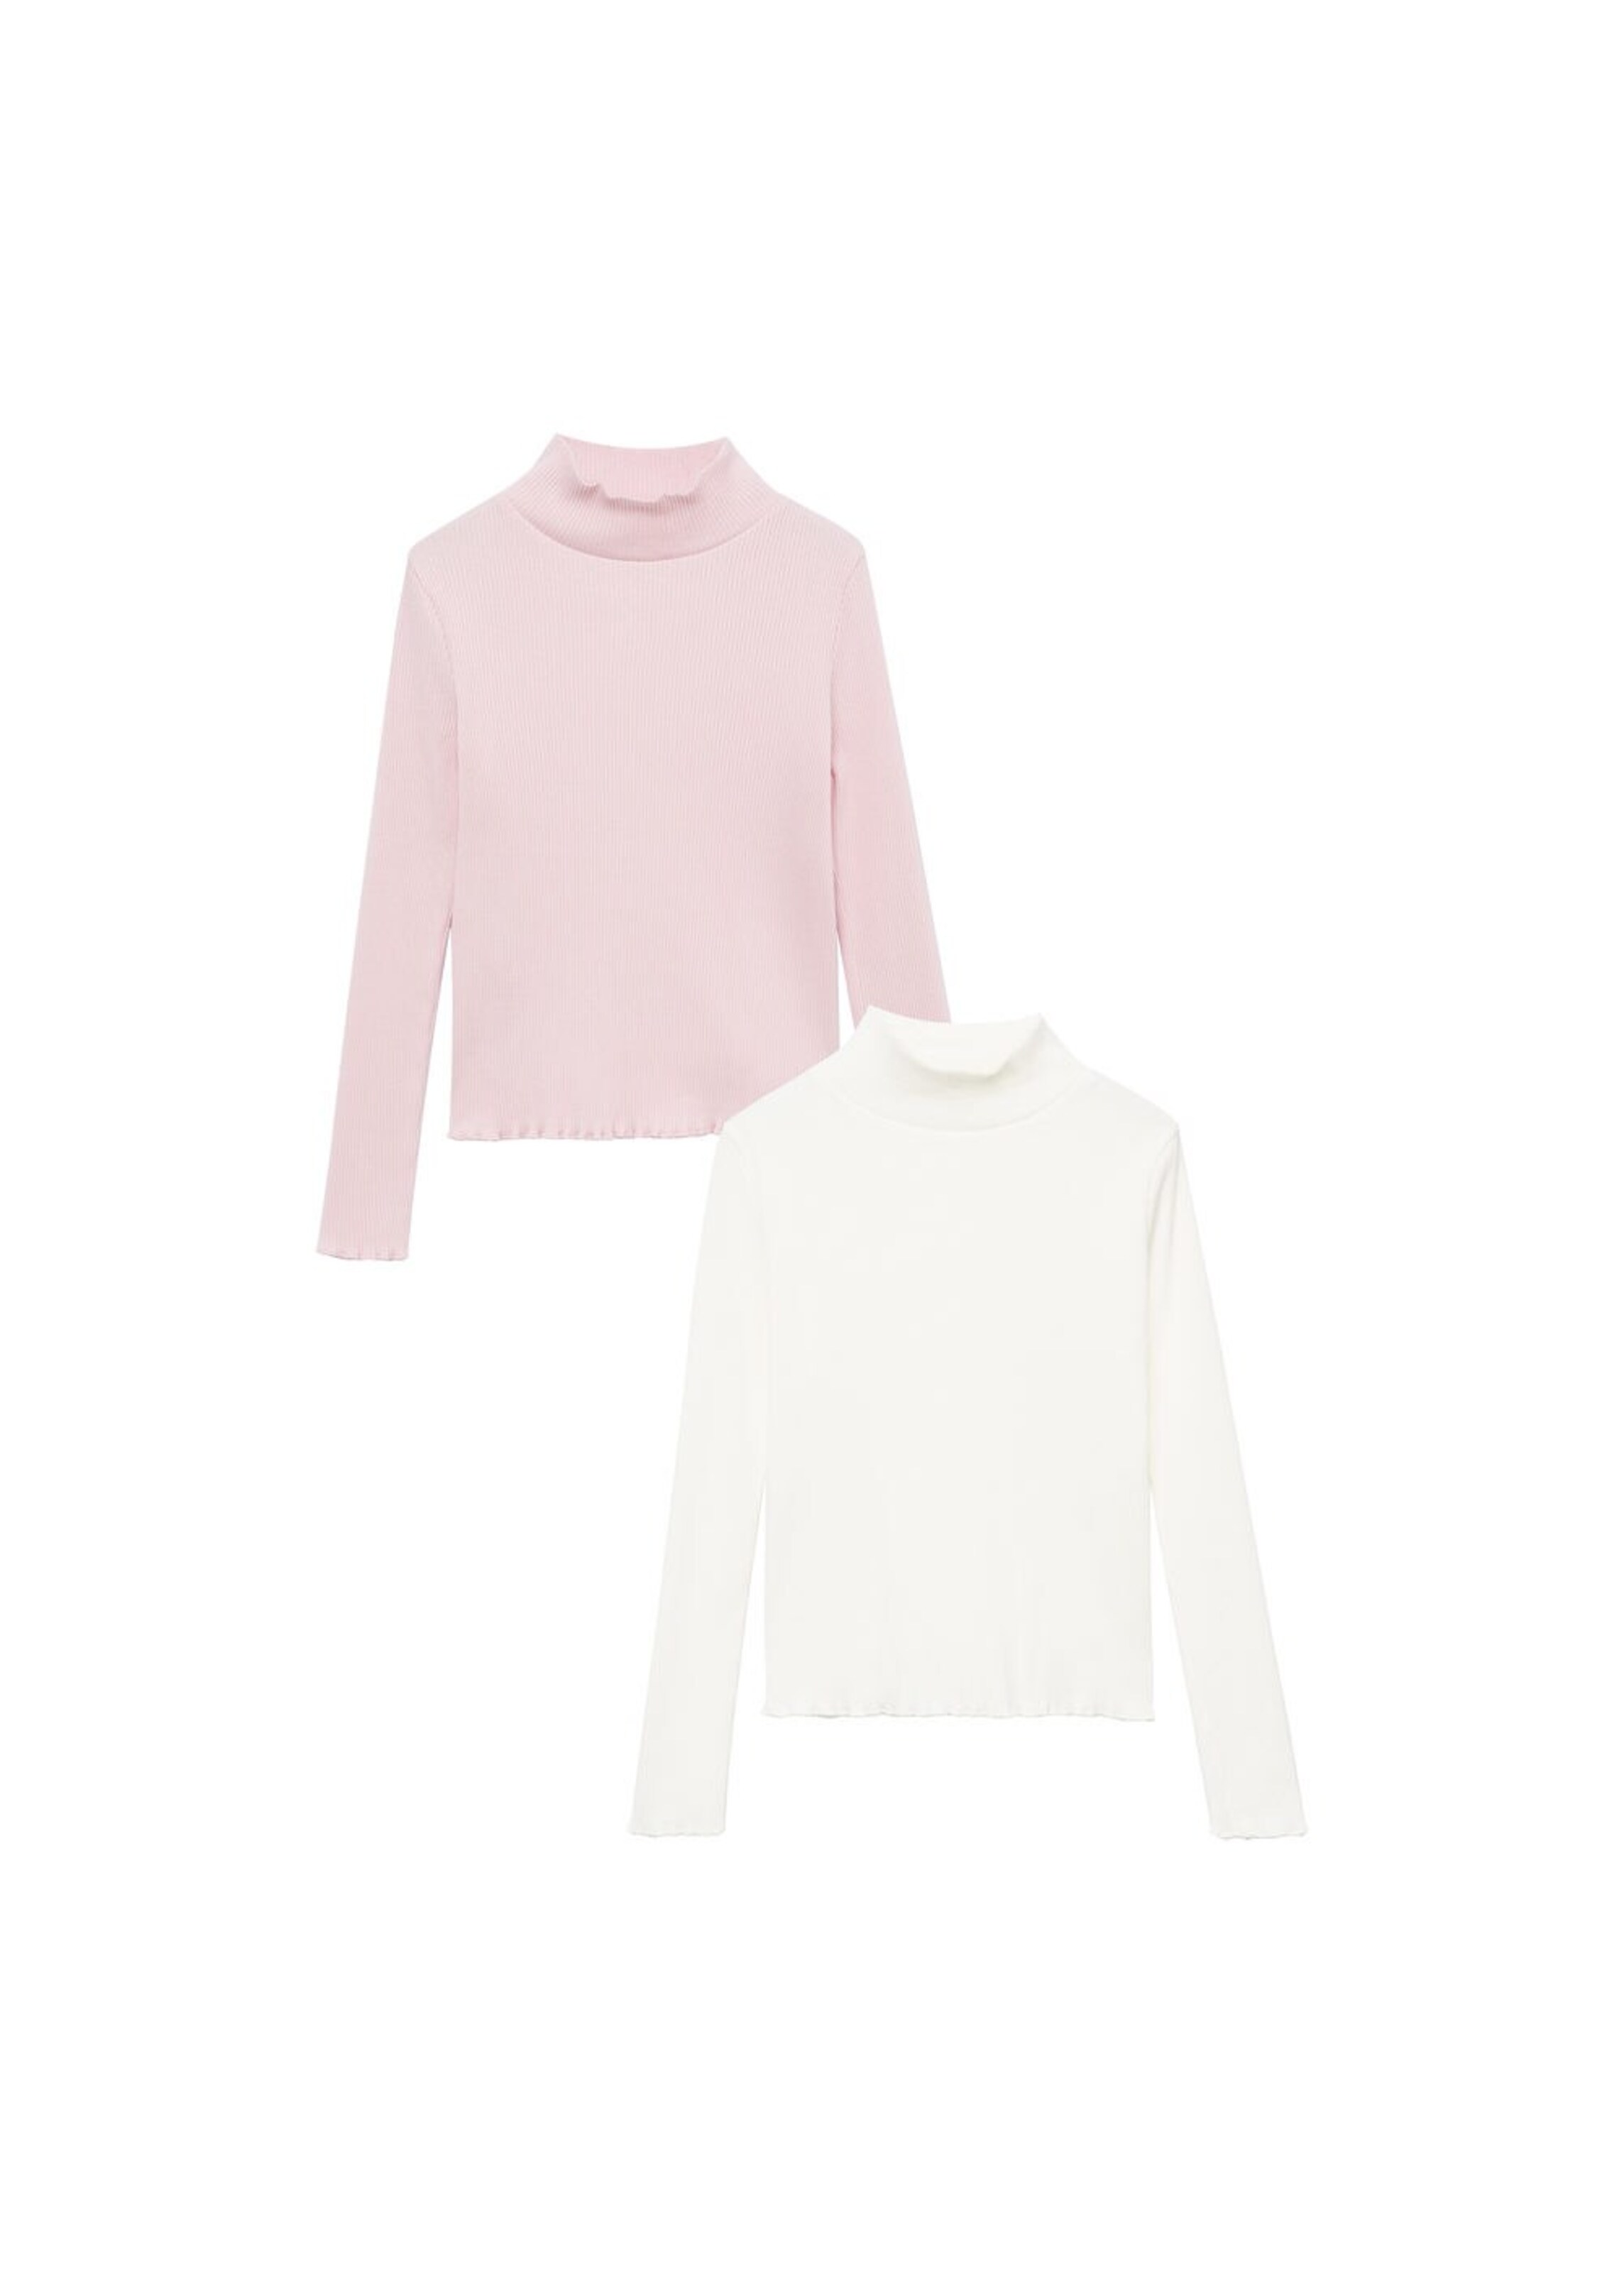 Kinder Teens (Gr. 140-176) MANGO KIDS Shirt in Pink, Weiß - XG84444